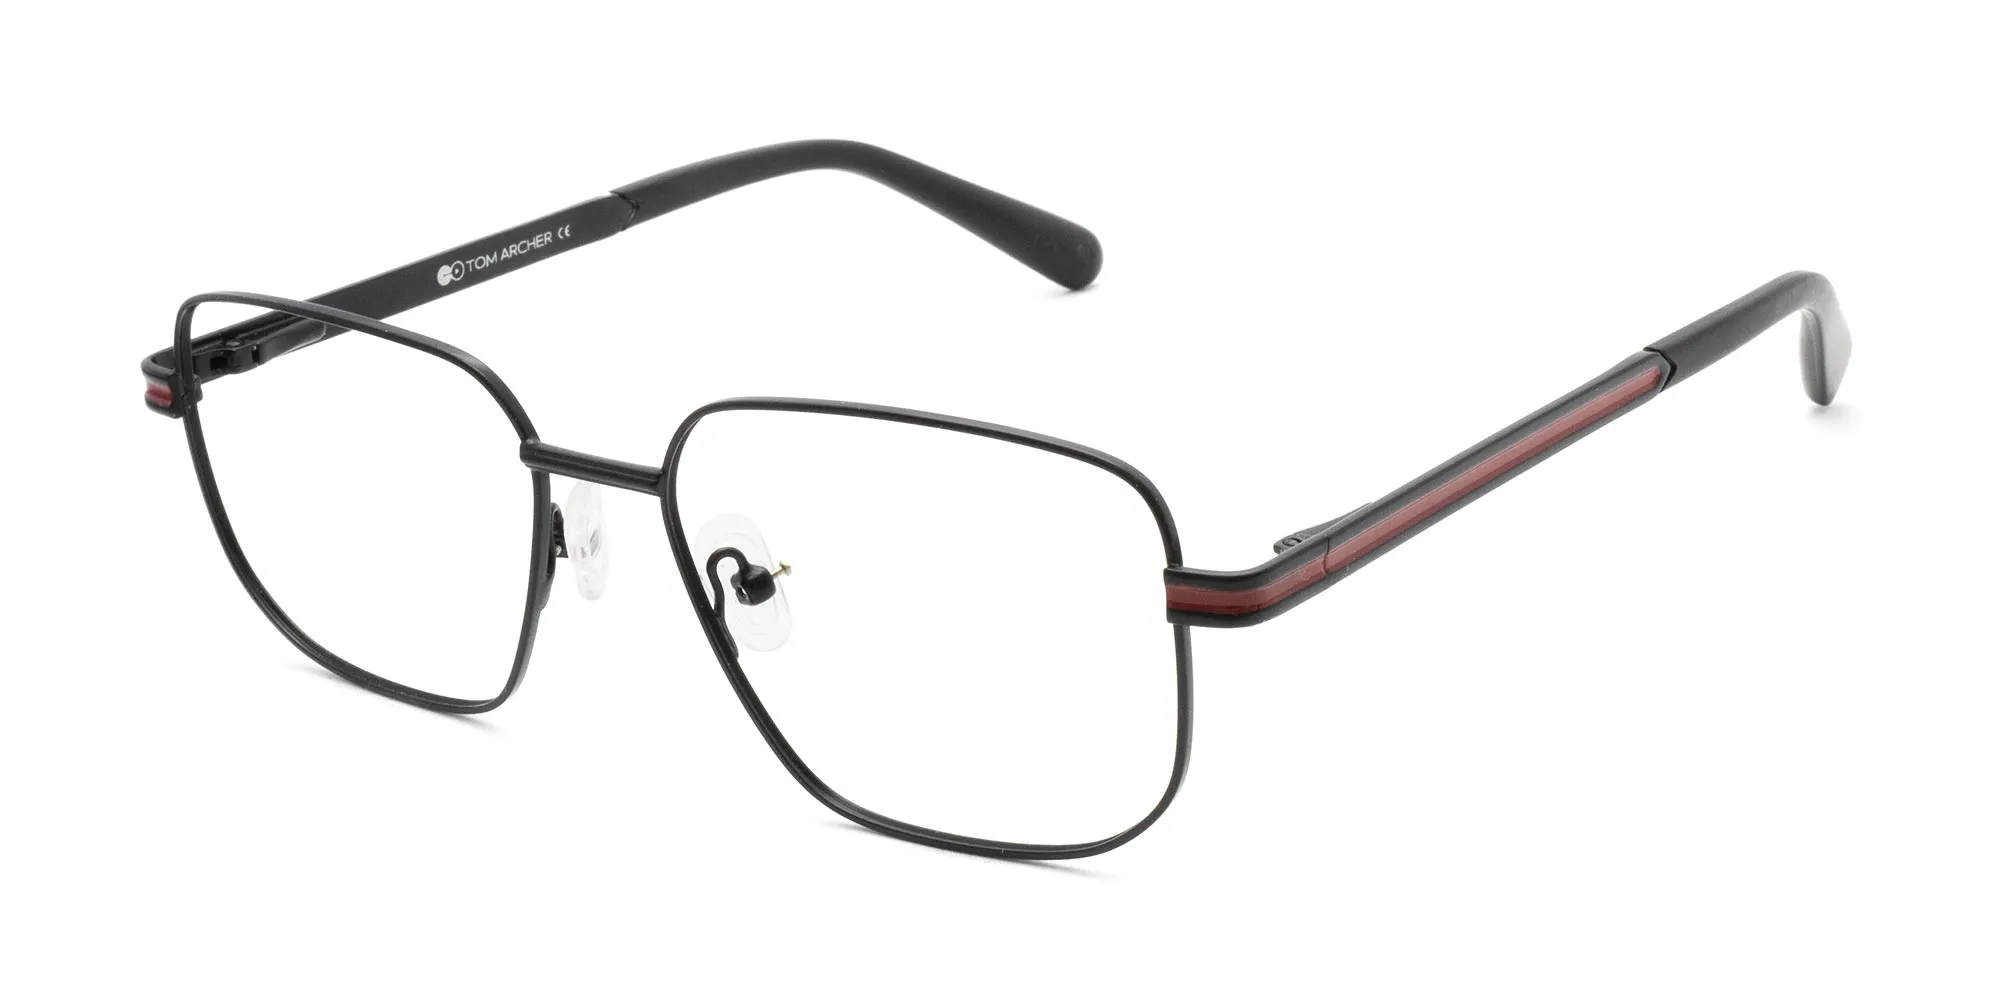 Black Square Frame Metal Glasses